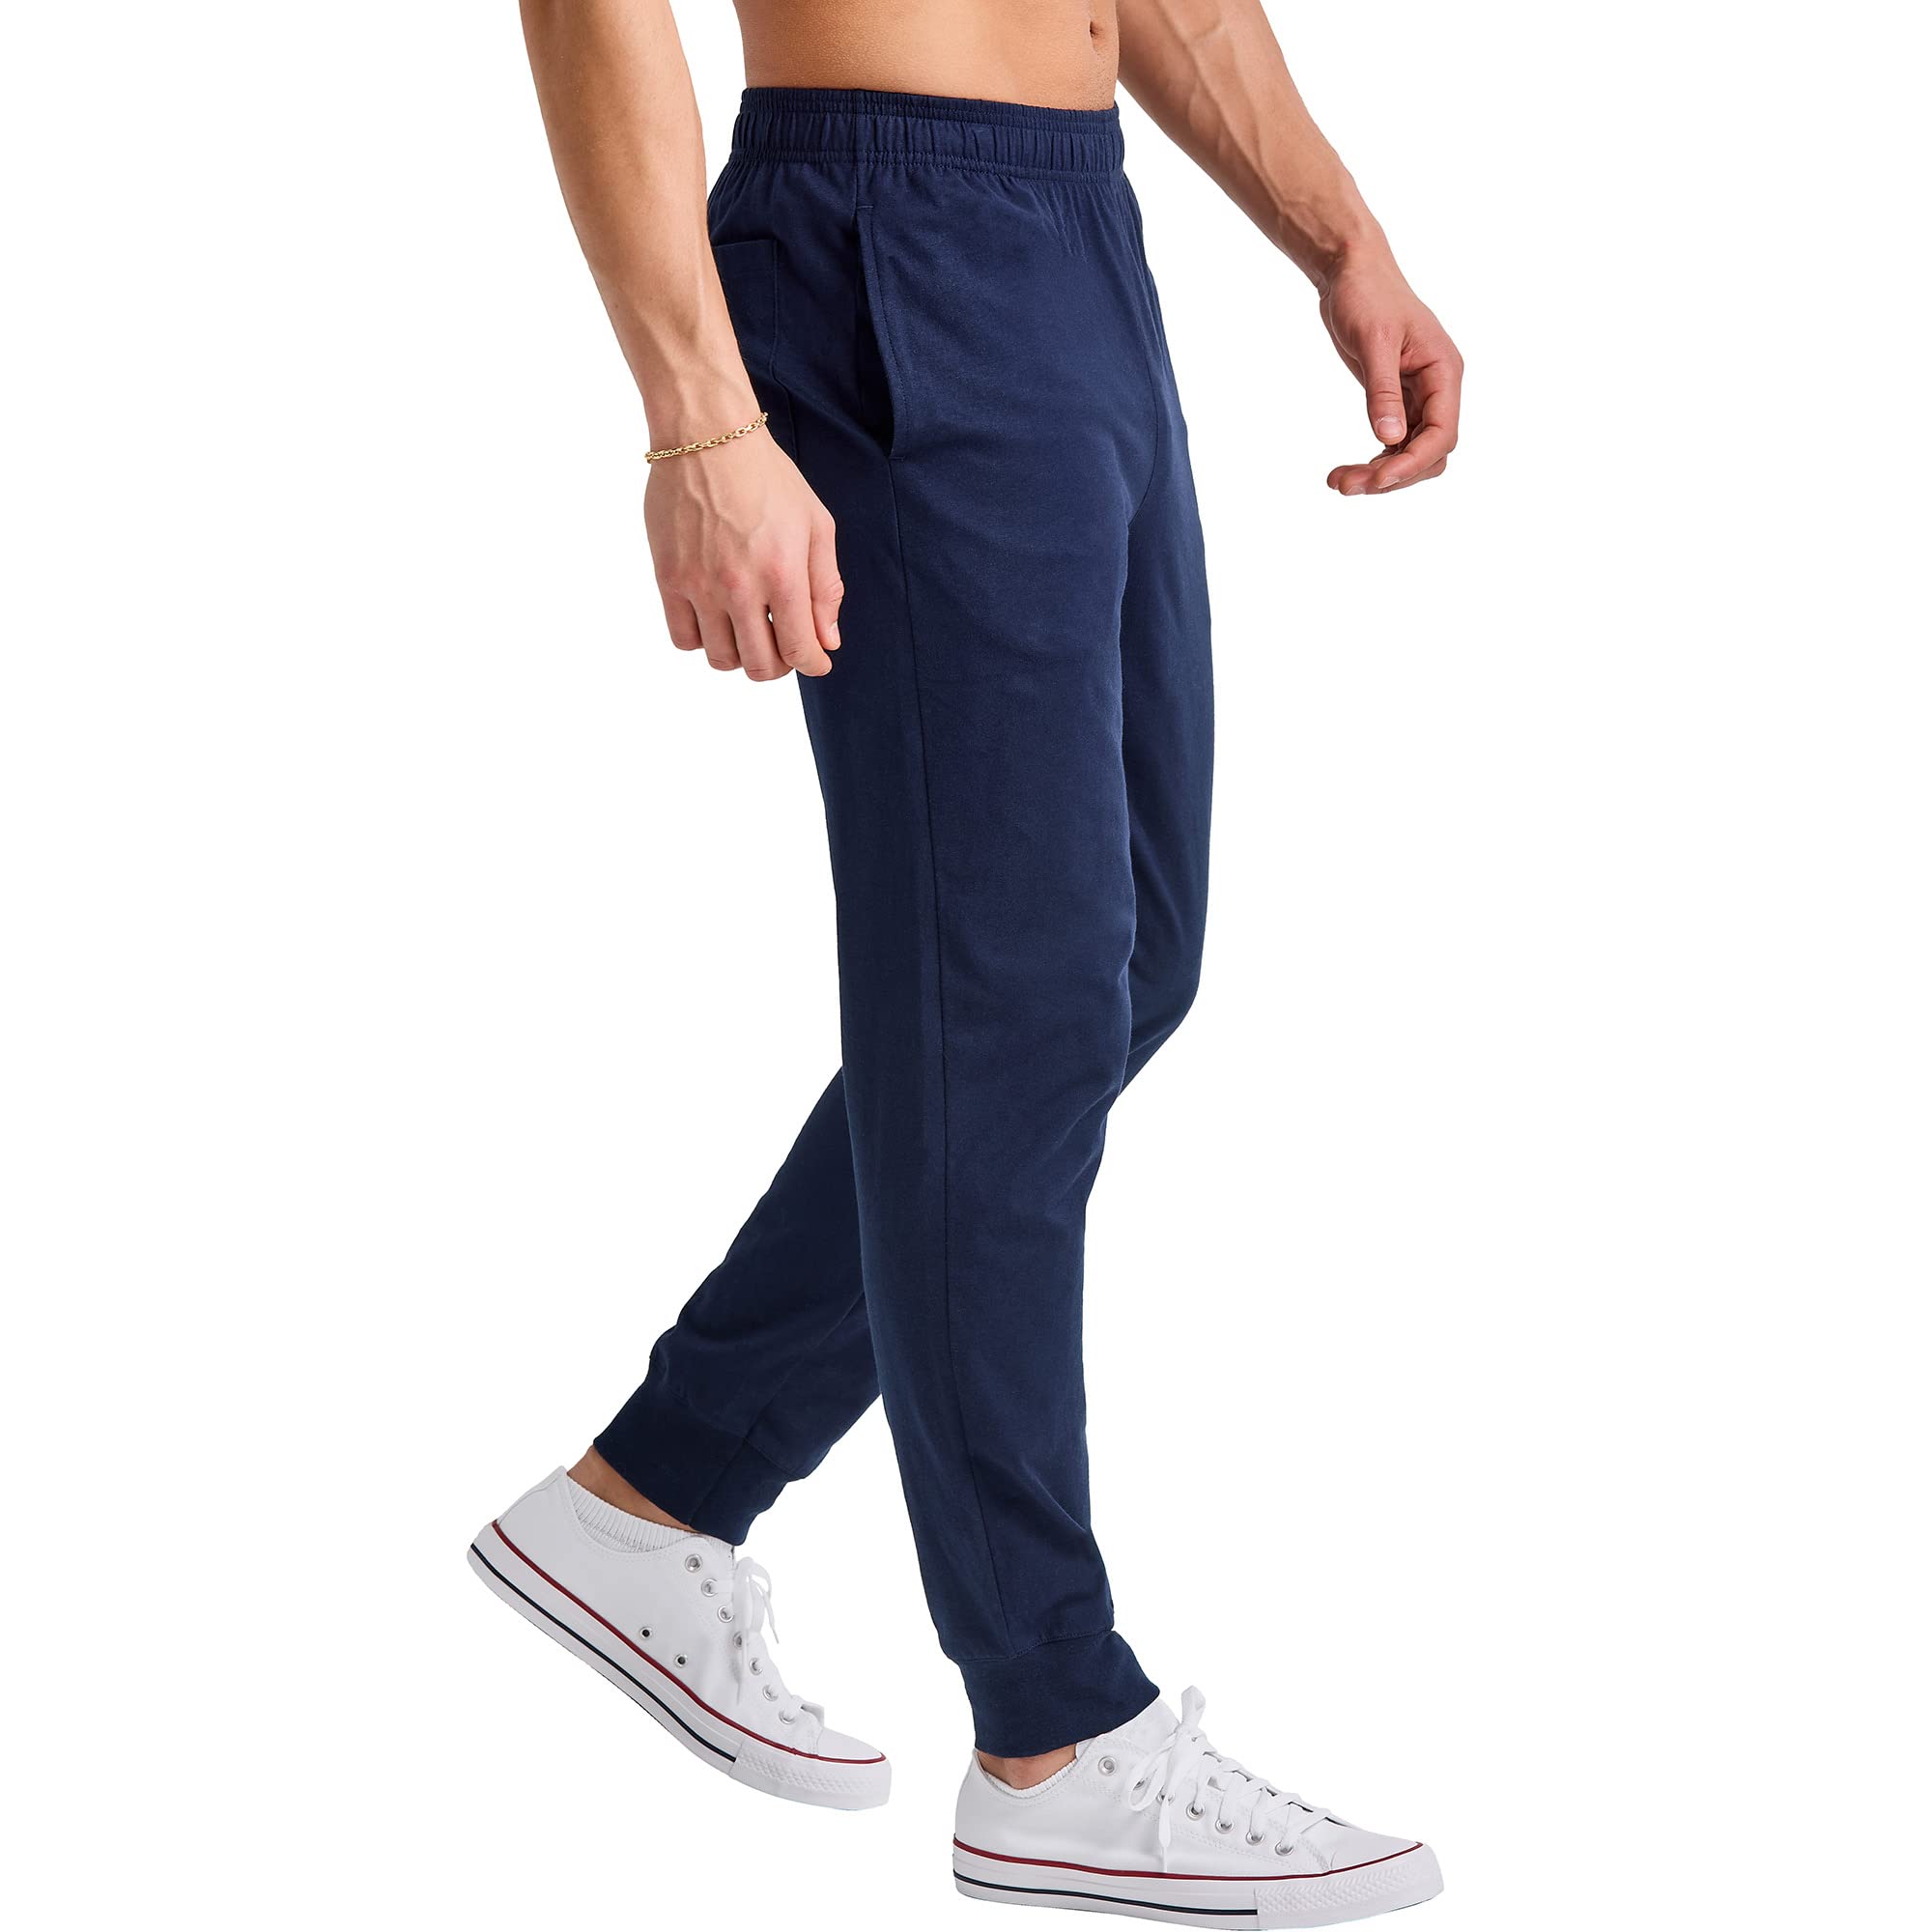 Hanes Originals Cotton Joggers, Jersey Sweatpants for Men with Pockets, 30